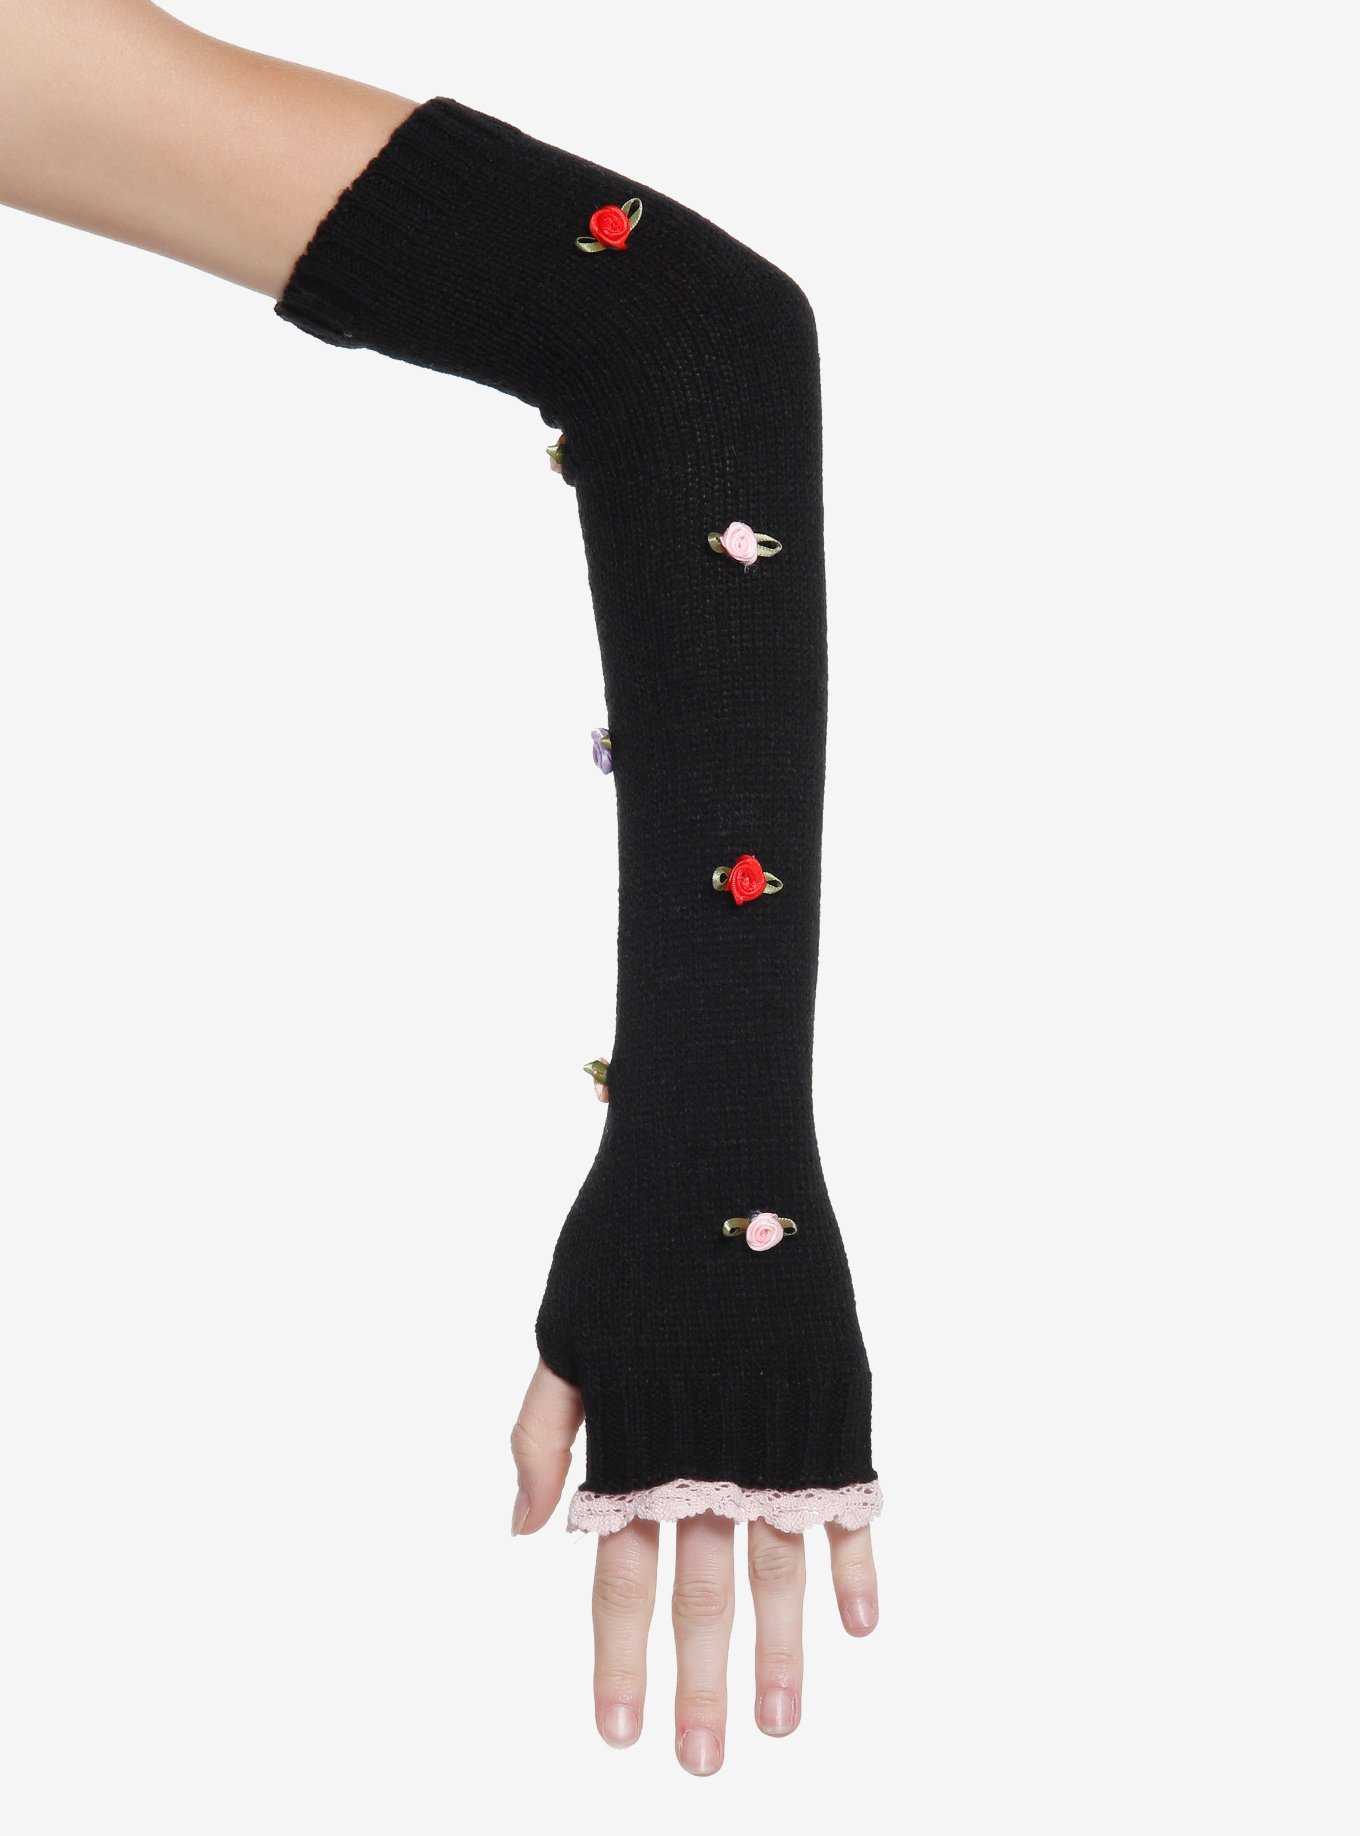 Floral Rosette Arm Warmers, , hi-res